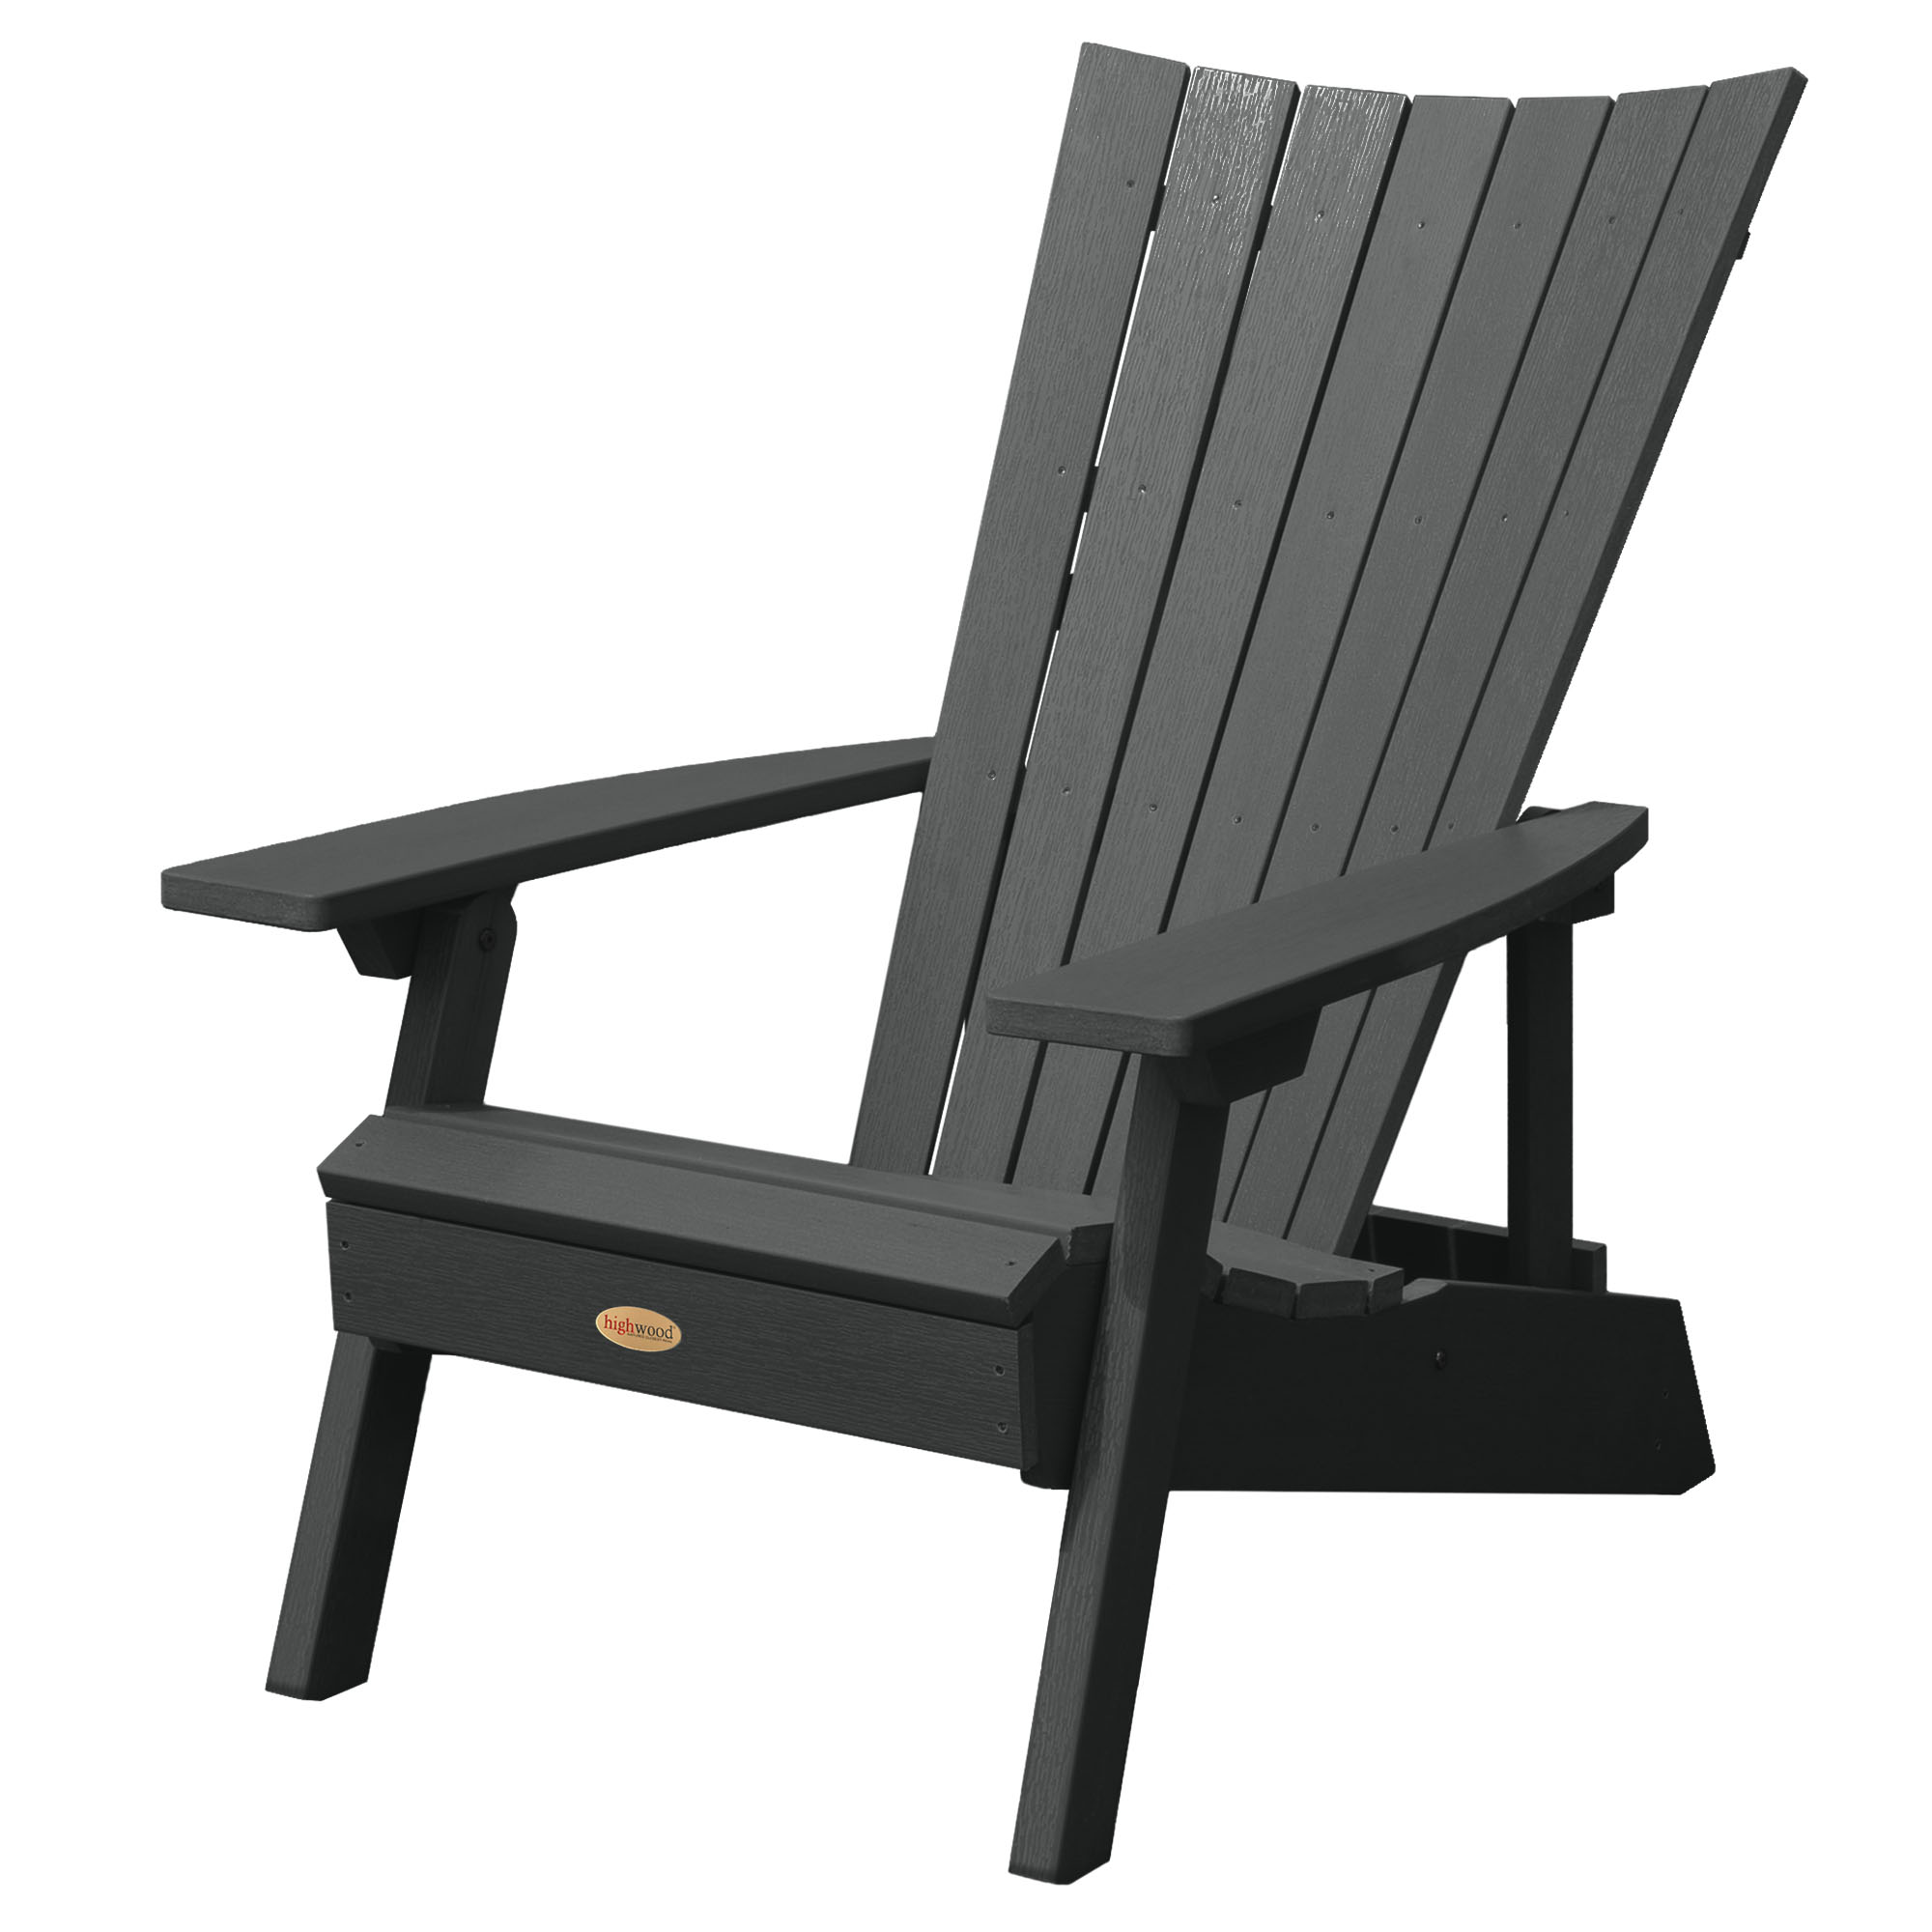 Highwood Manhattan Beach Adirondack Chair with Folding Ottoman - image 3 of 6